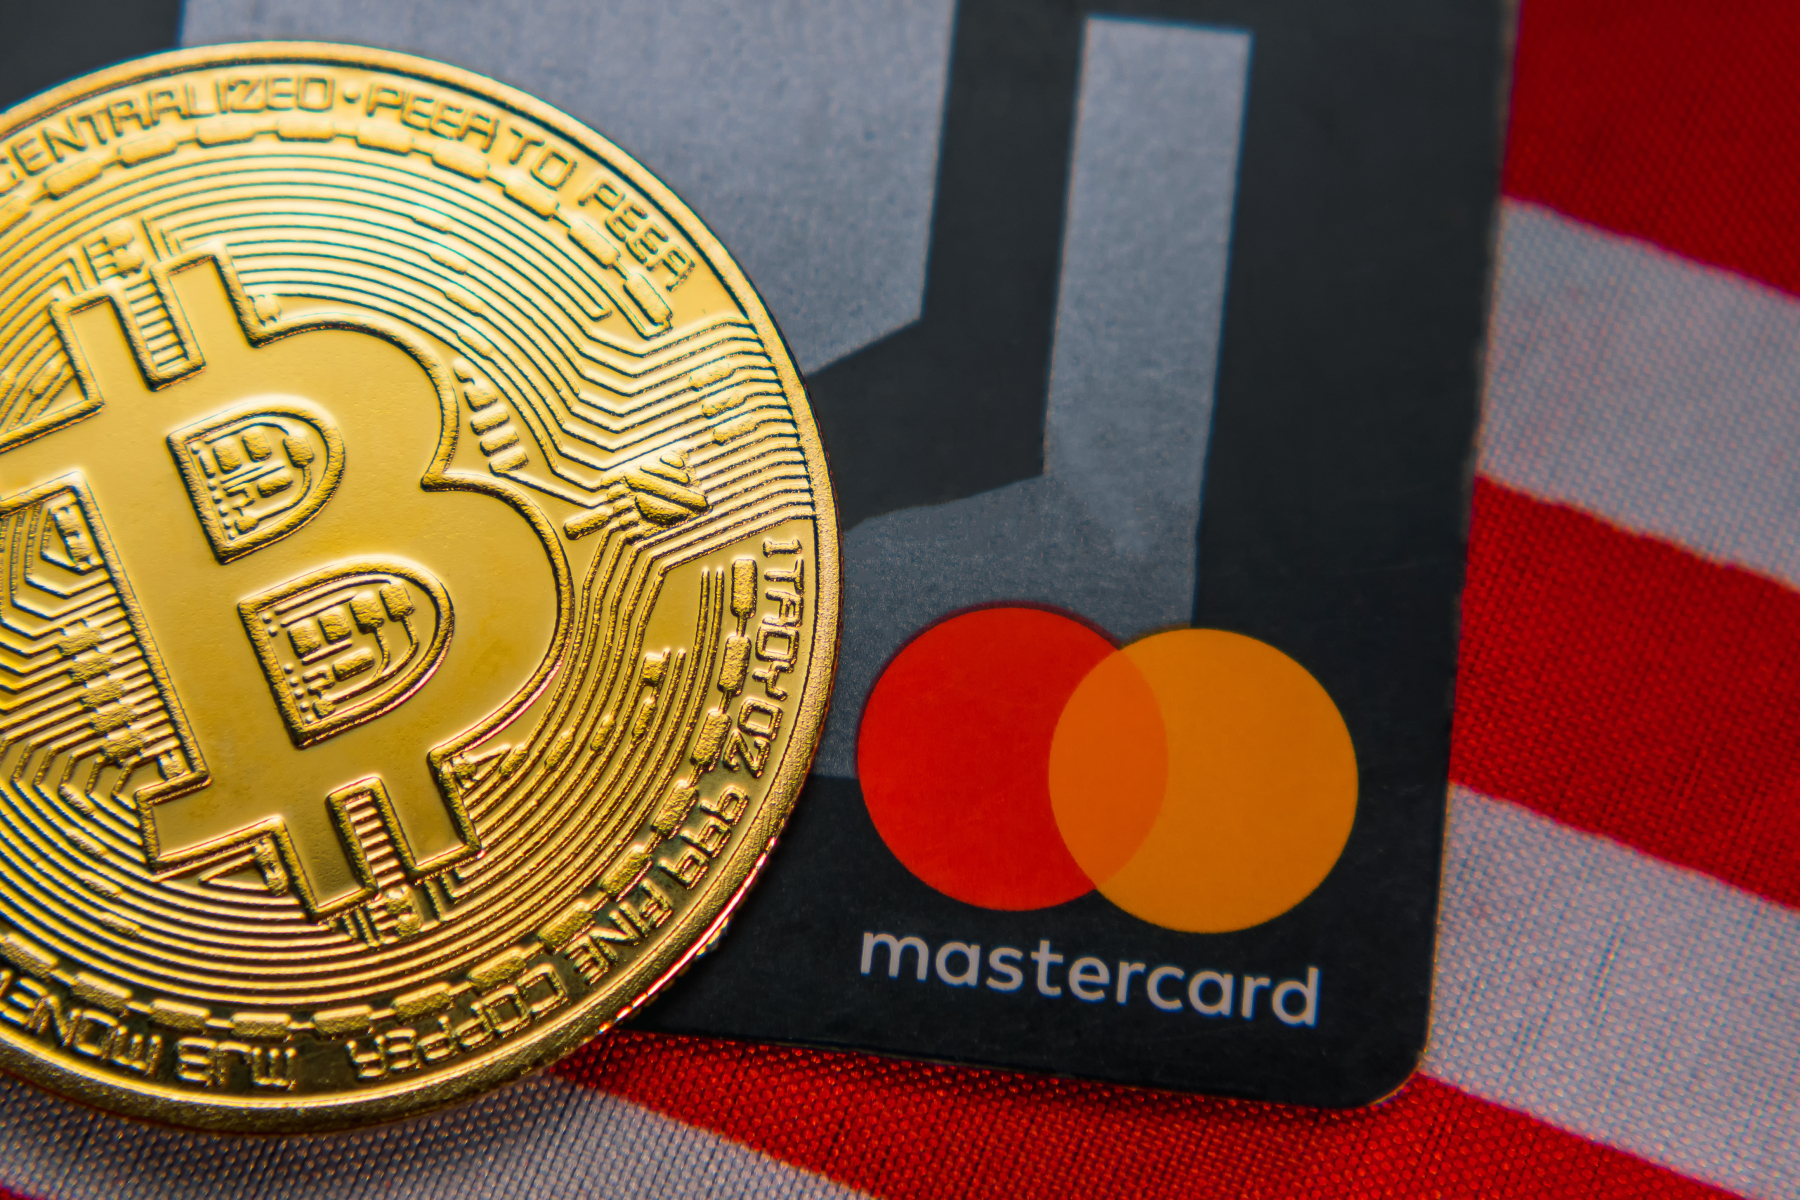 Mastercard CEO: Crypto Will Eventually Enjoy Mass Adoption
